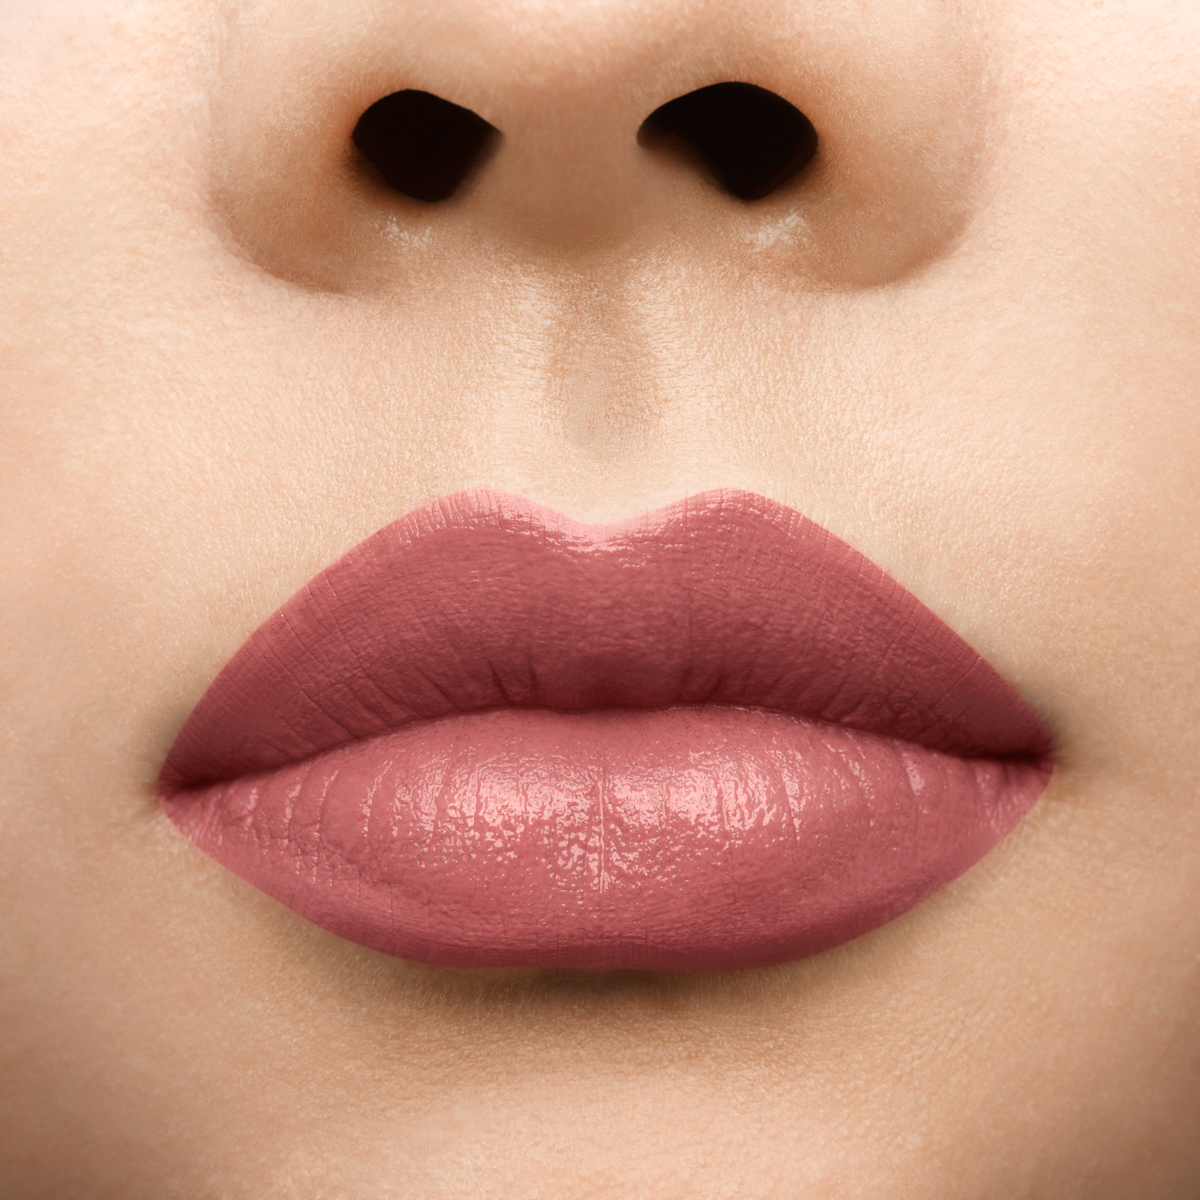 Christian Louboutin Lipstick Review 